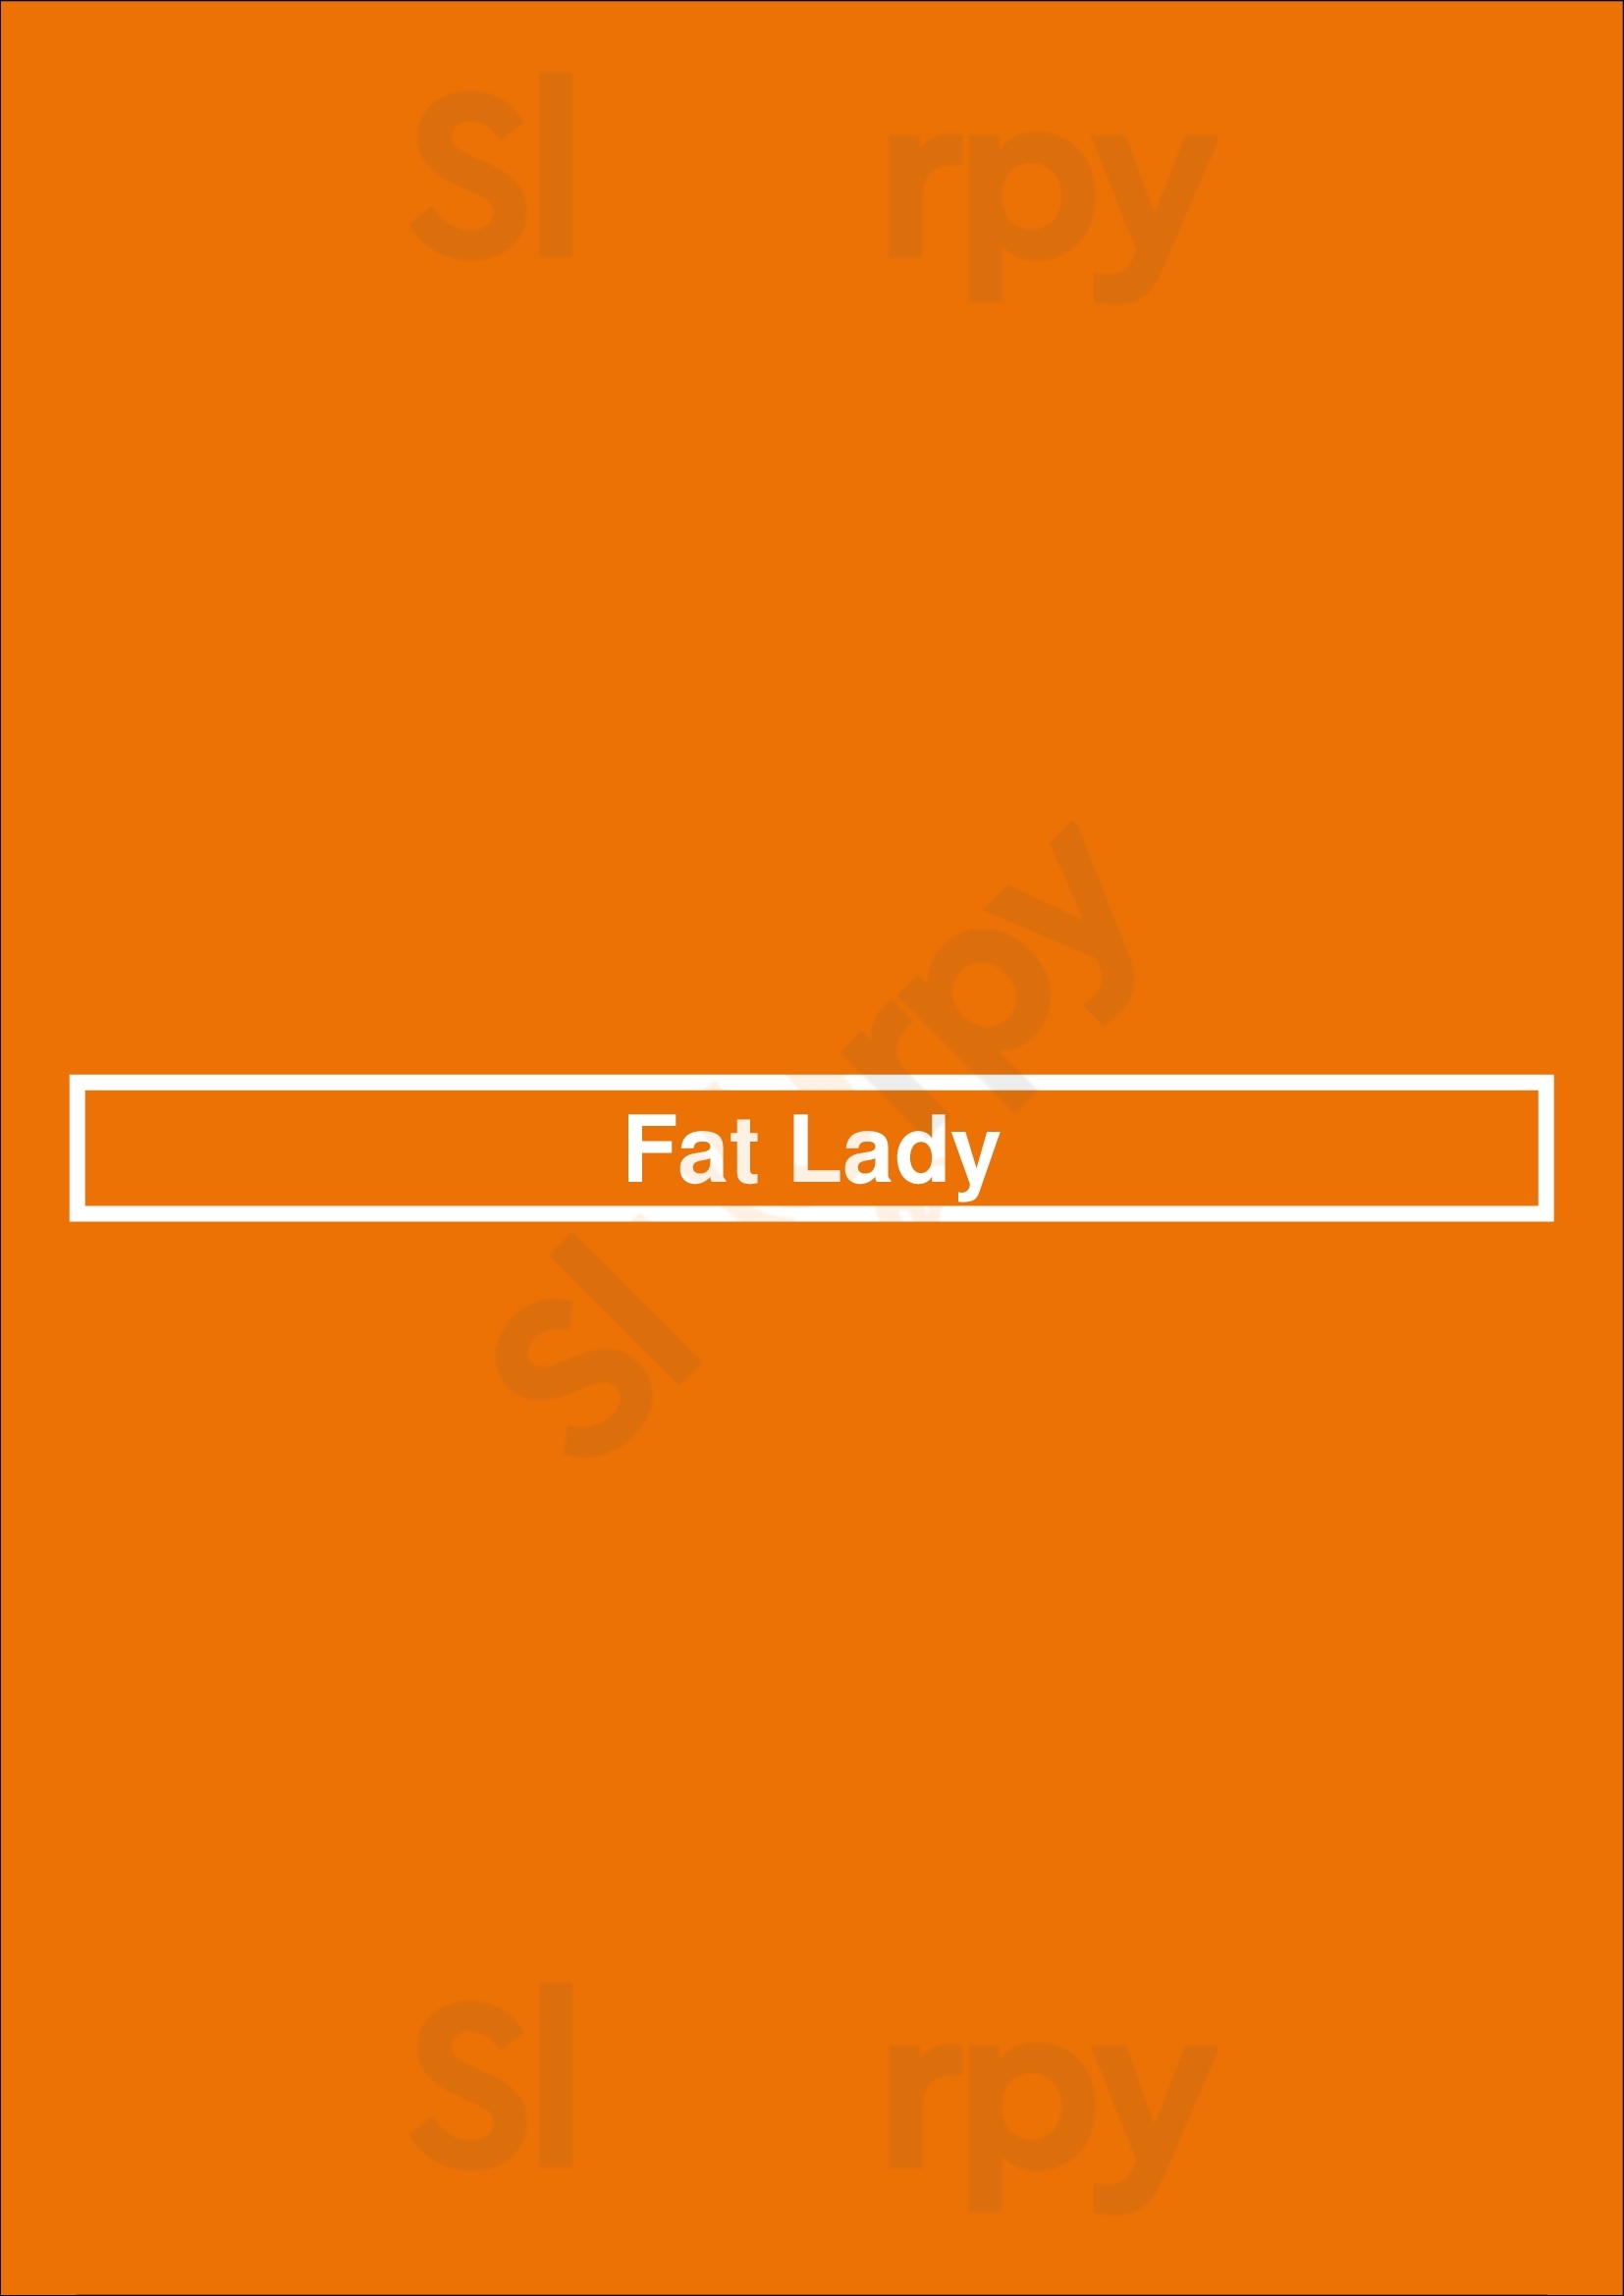 The Fat Lady Bar & Restaurant Oakland Menu - 1